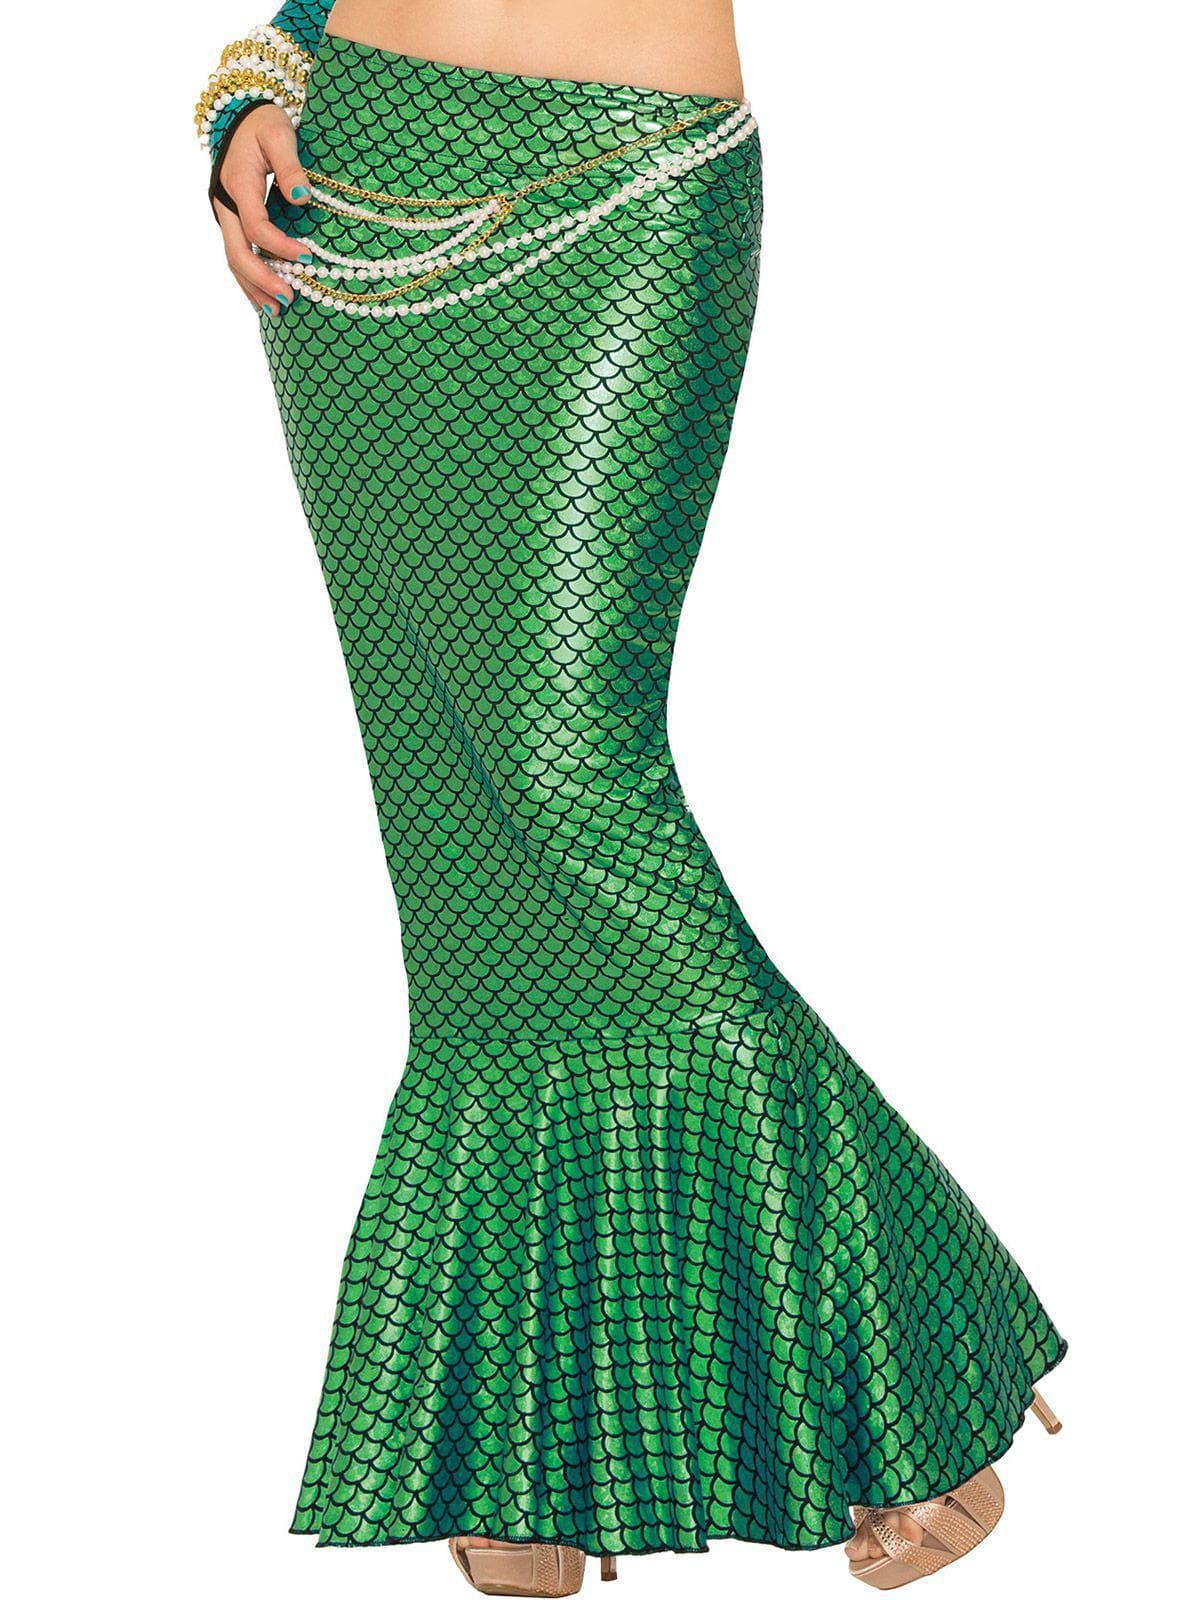 Women's Green Mermaid Fin Skirt - costumes.com